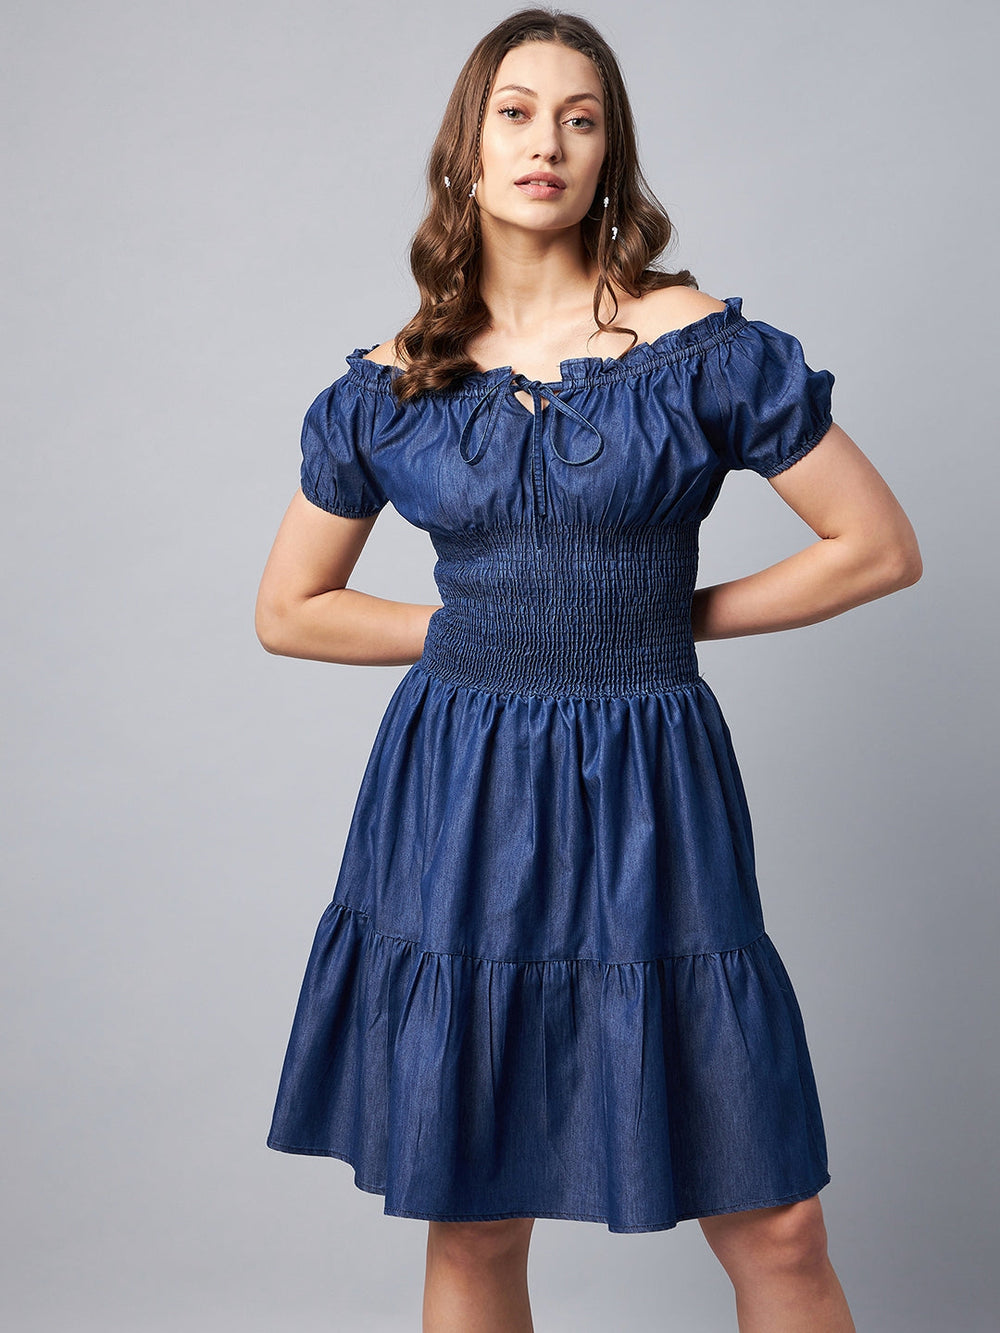 Blue-Denim-Peasant-Style-Smocked-Waist-Dress